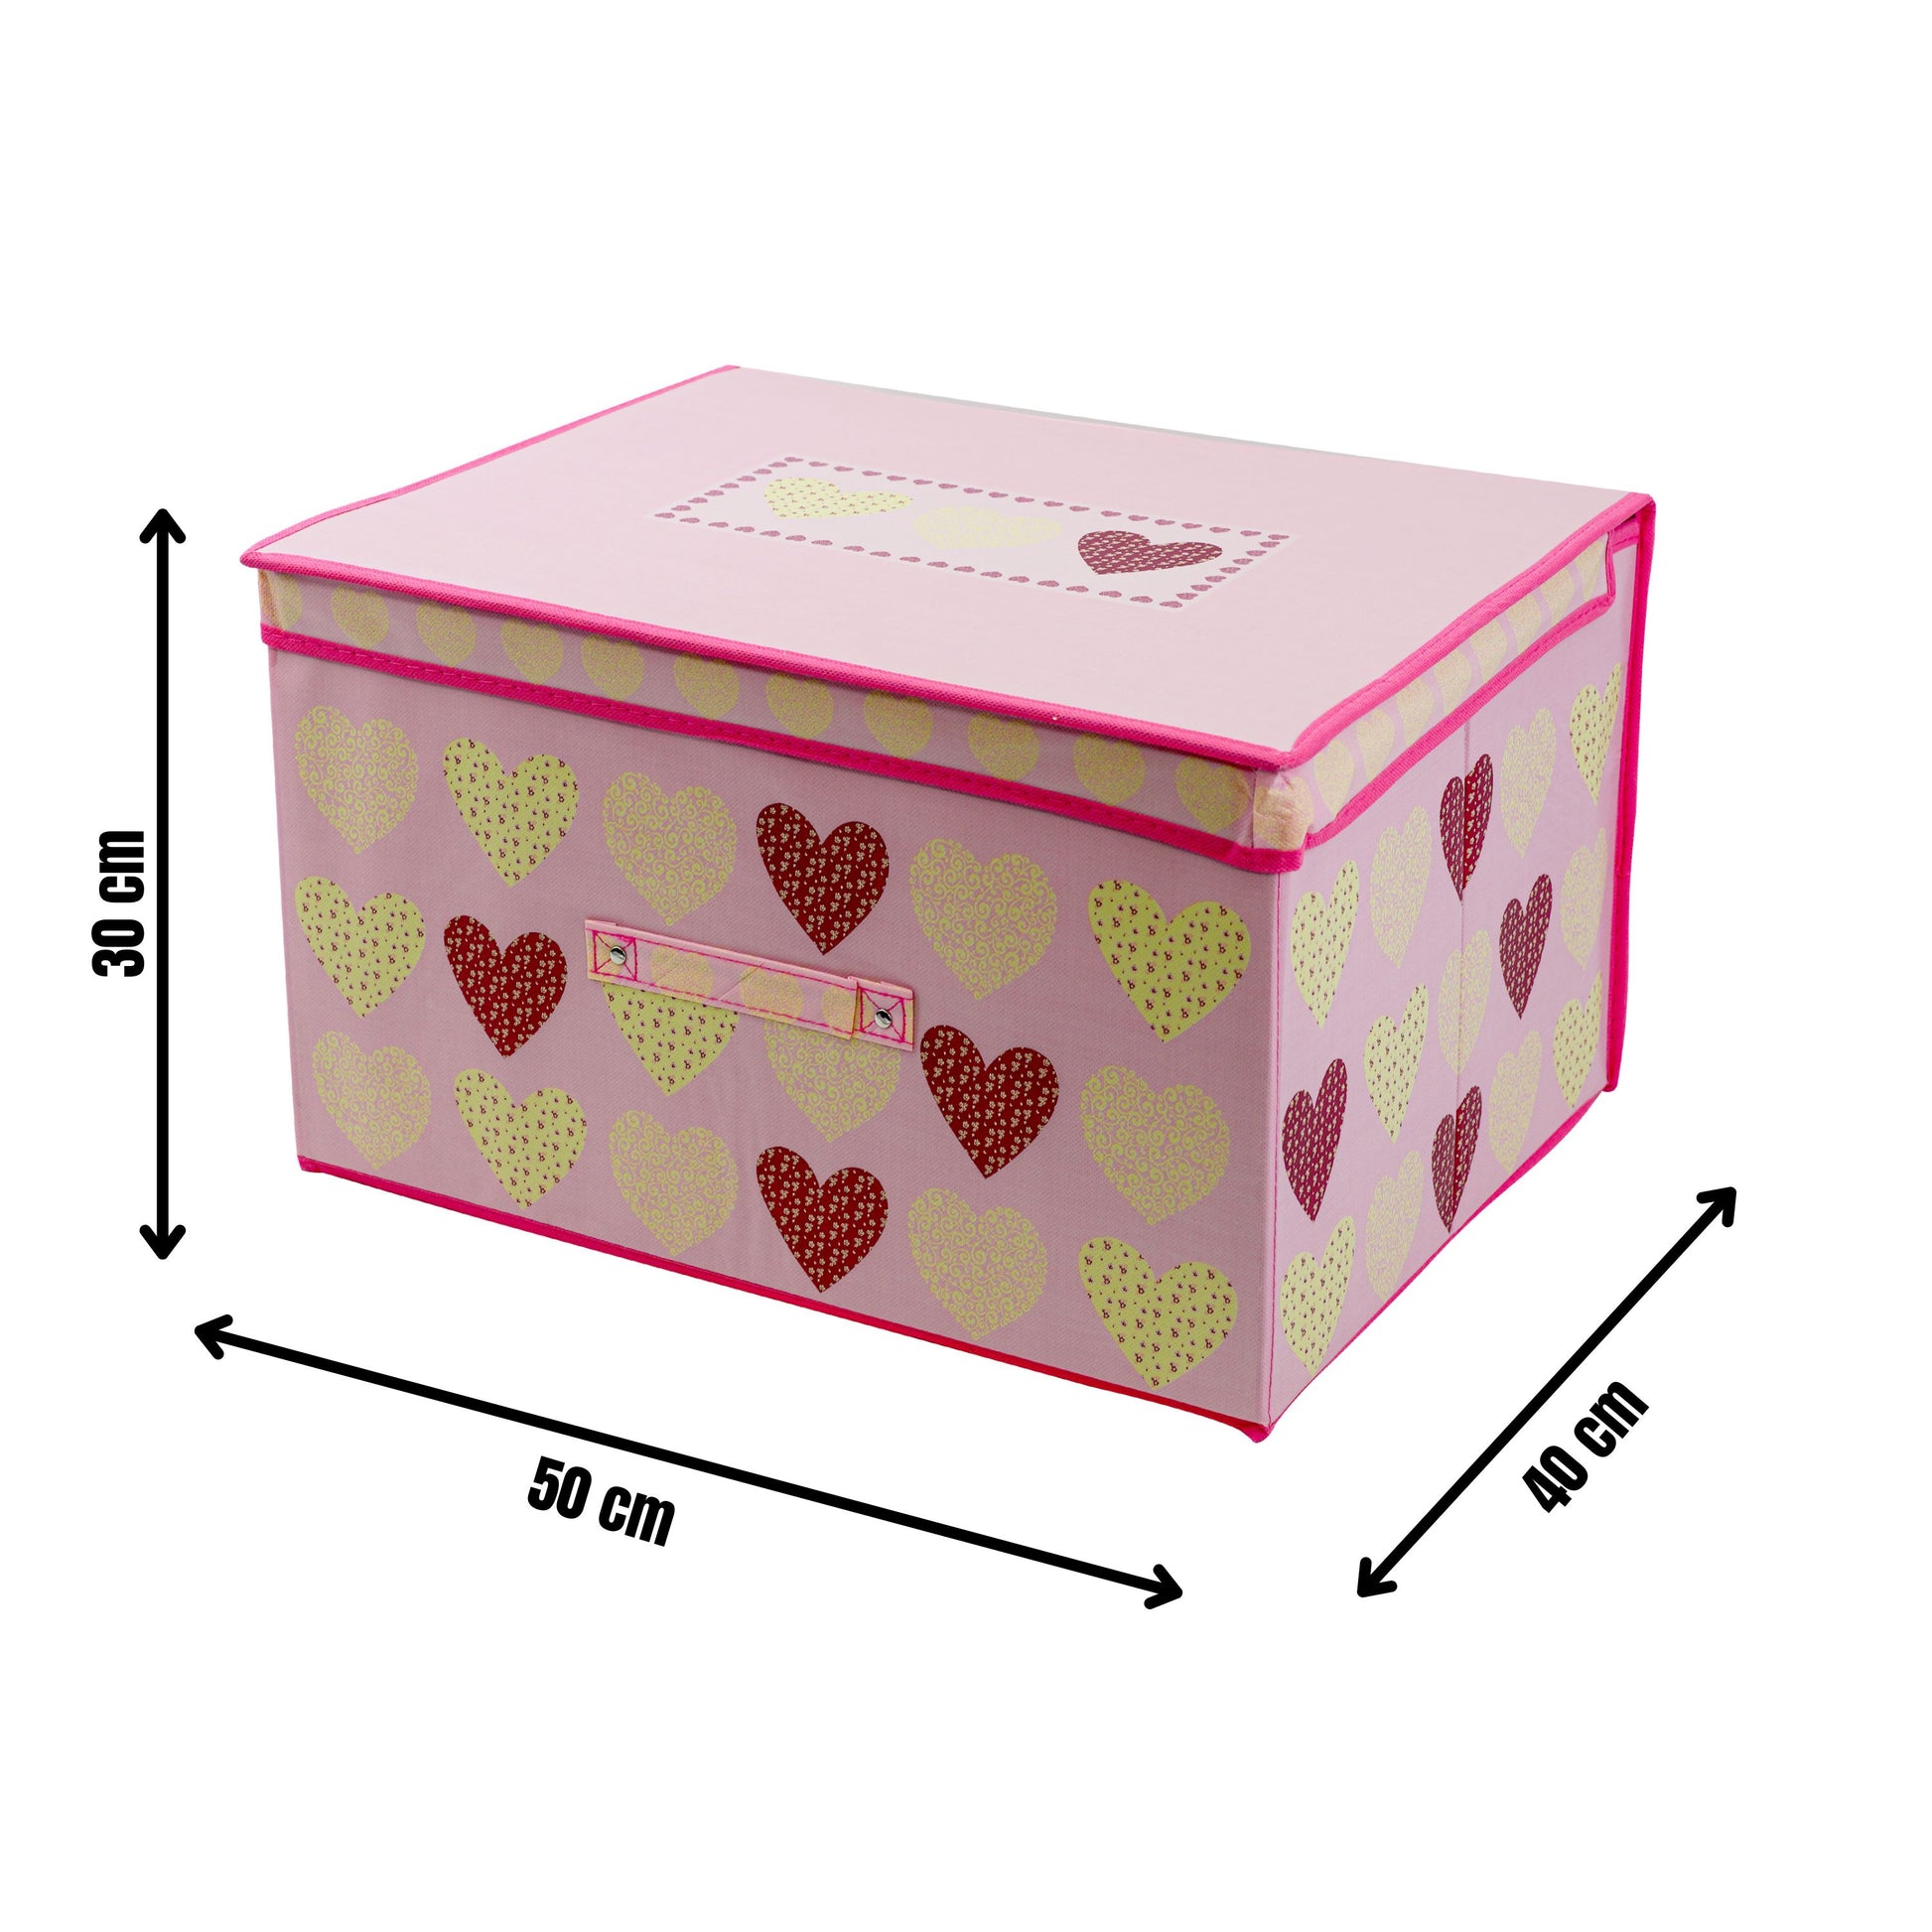 Pink Hearts Large Storage Box by The Magic Toy Shop - UKBuyZone